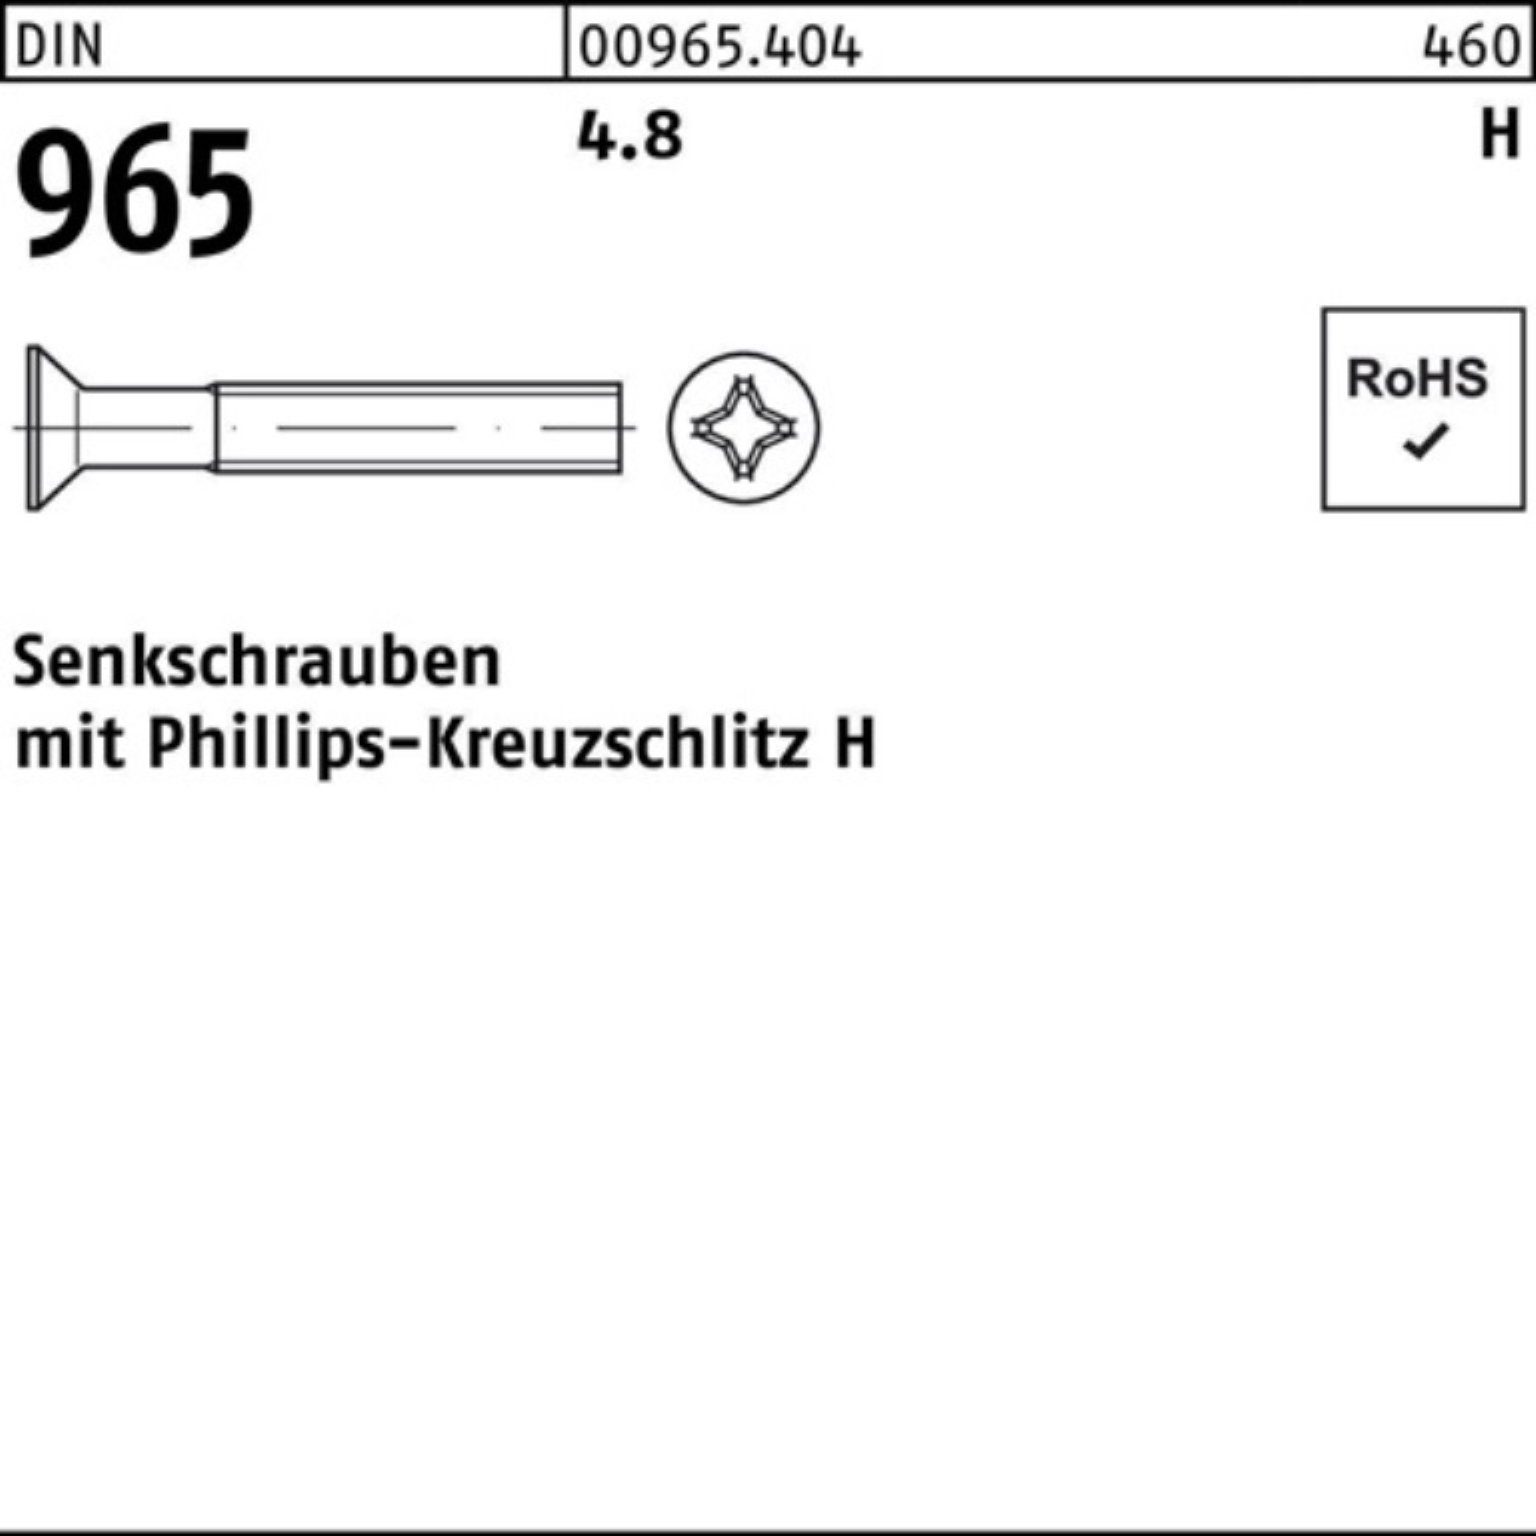 Marken im Fokus Reyher Senkschraube Senkschraube DIN 2000 965 PH DIN 2000er Stück M3x 4.8 Pack 4. 965 5-H